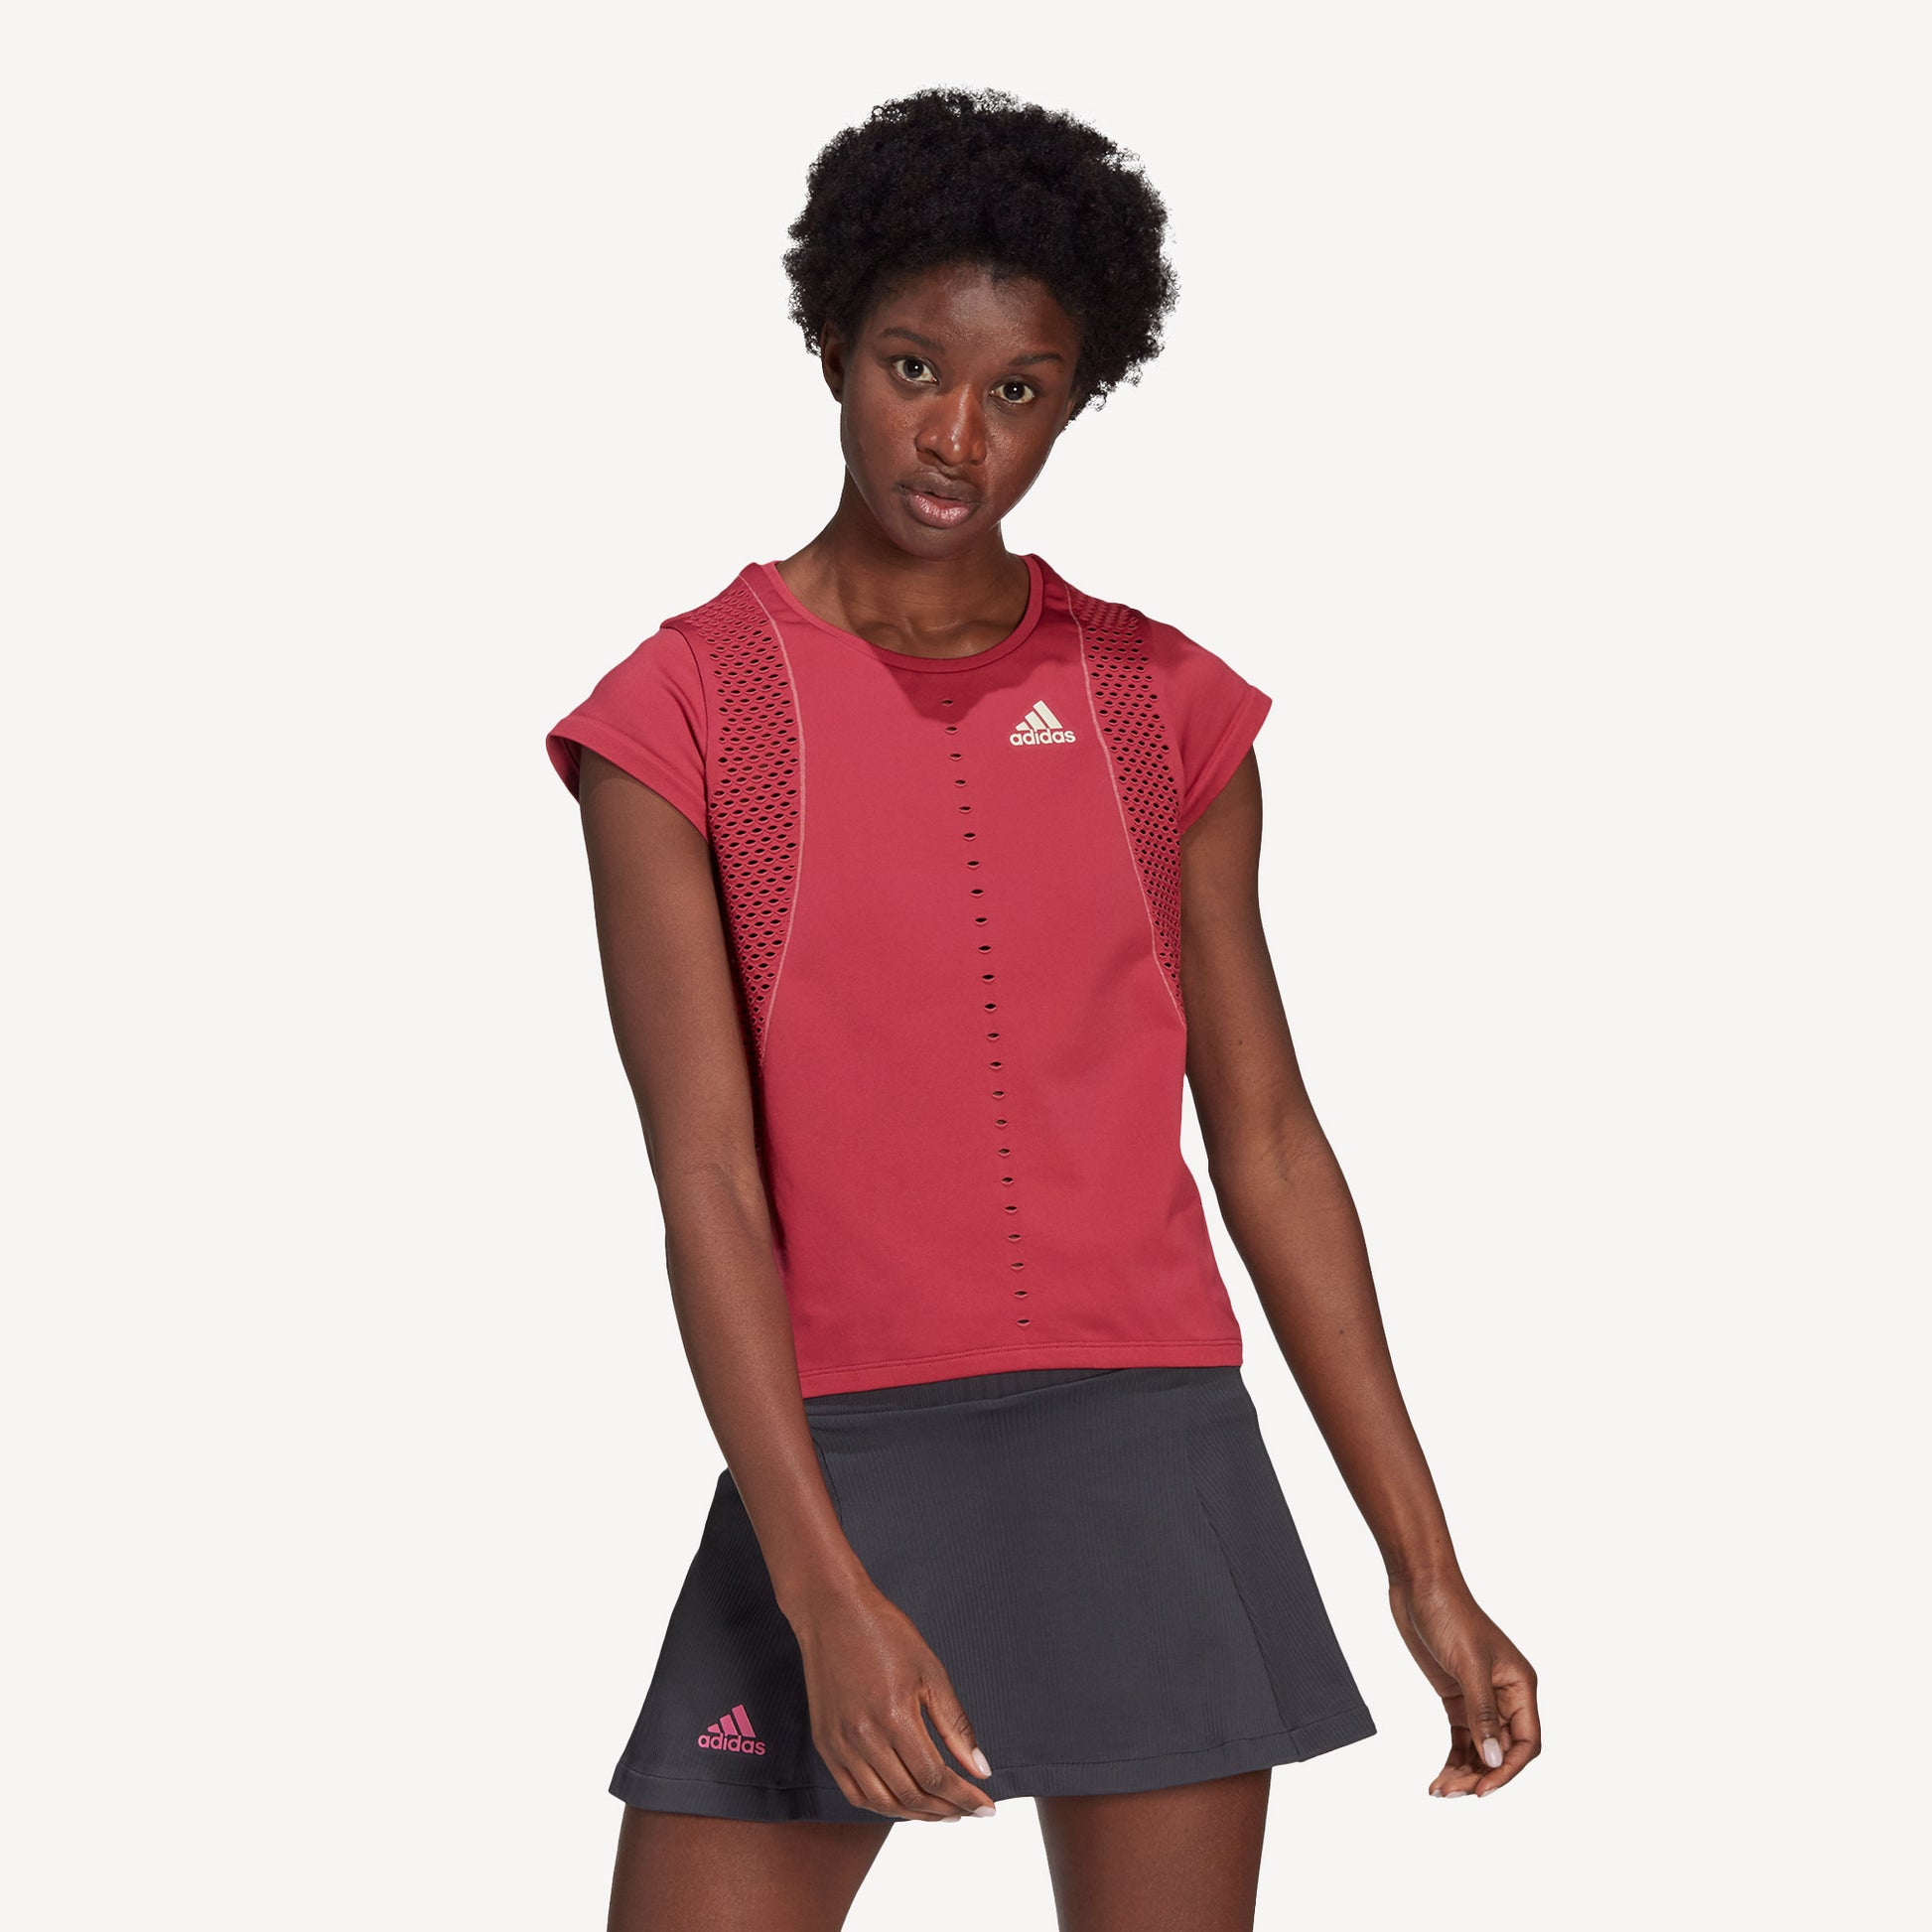 adidas Primeknit Primeblue Women's Tennis Shirt Pink (1)